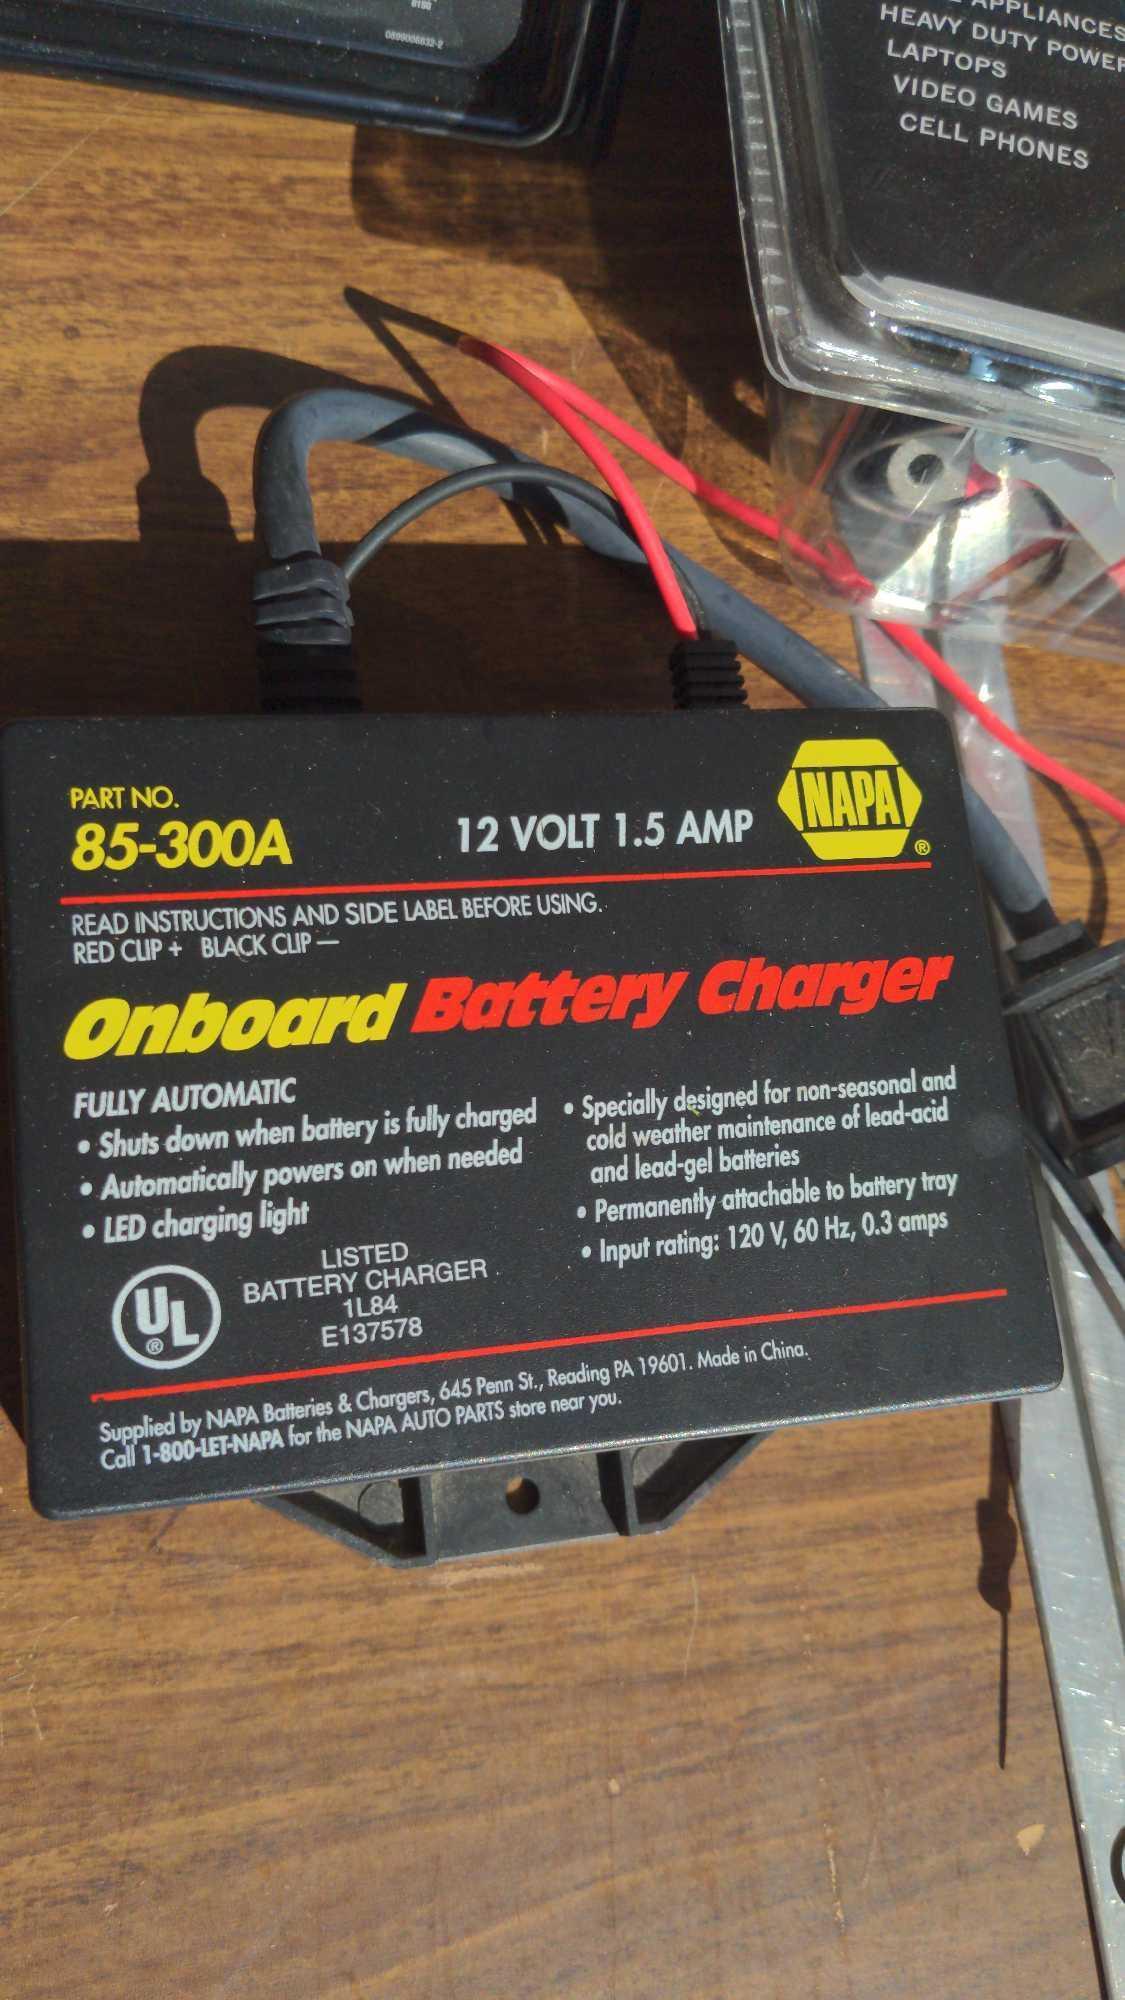 Battery Tester, Charger, Portable Power, & Power Inverter lot